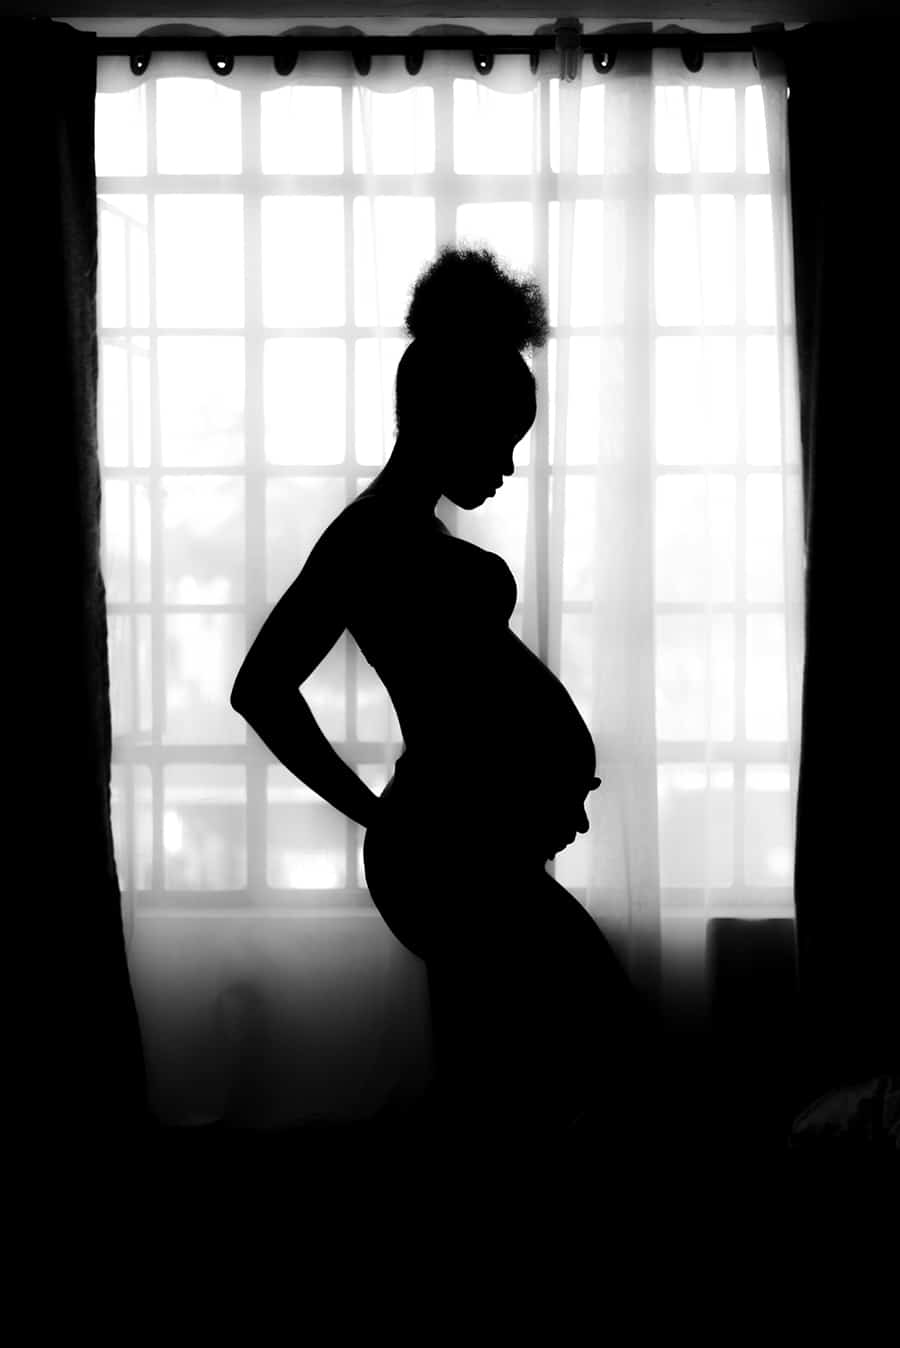 Pregnant form in silhouette